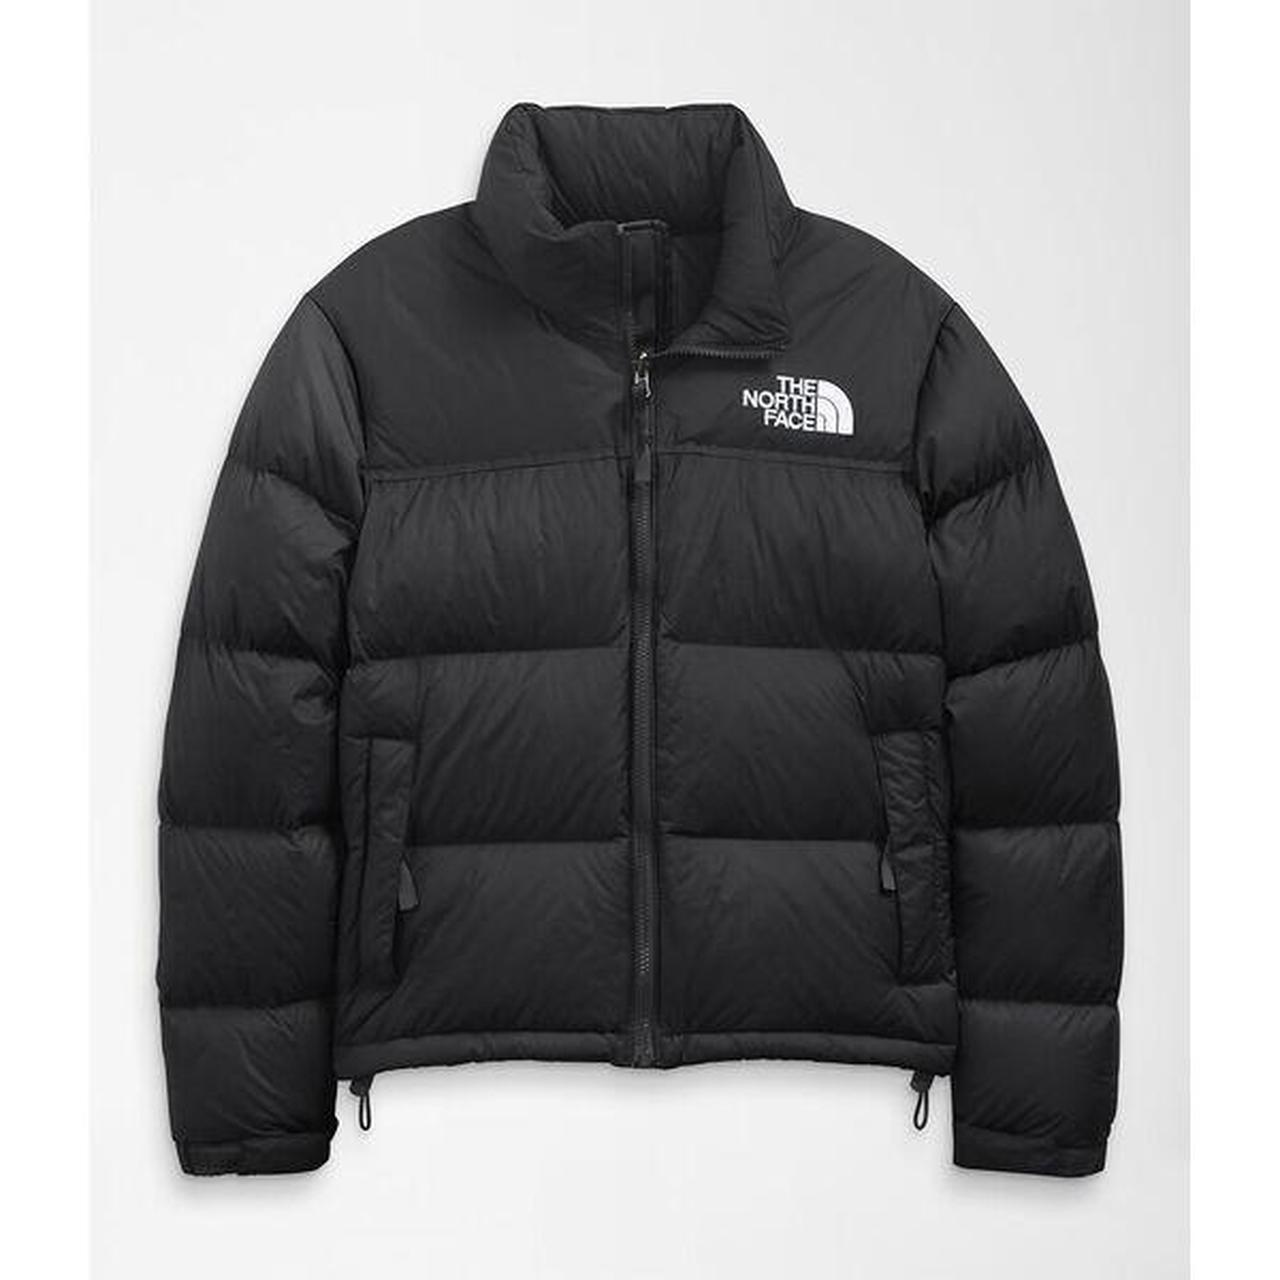 XS 1996 Retro Nuptse north face jacket. - bought... - Depop